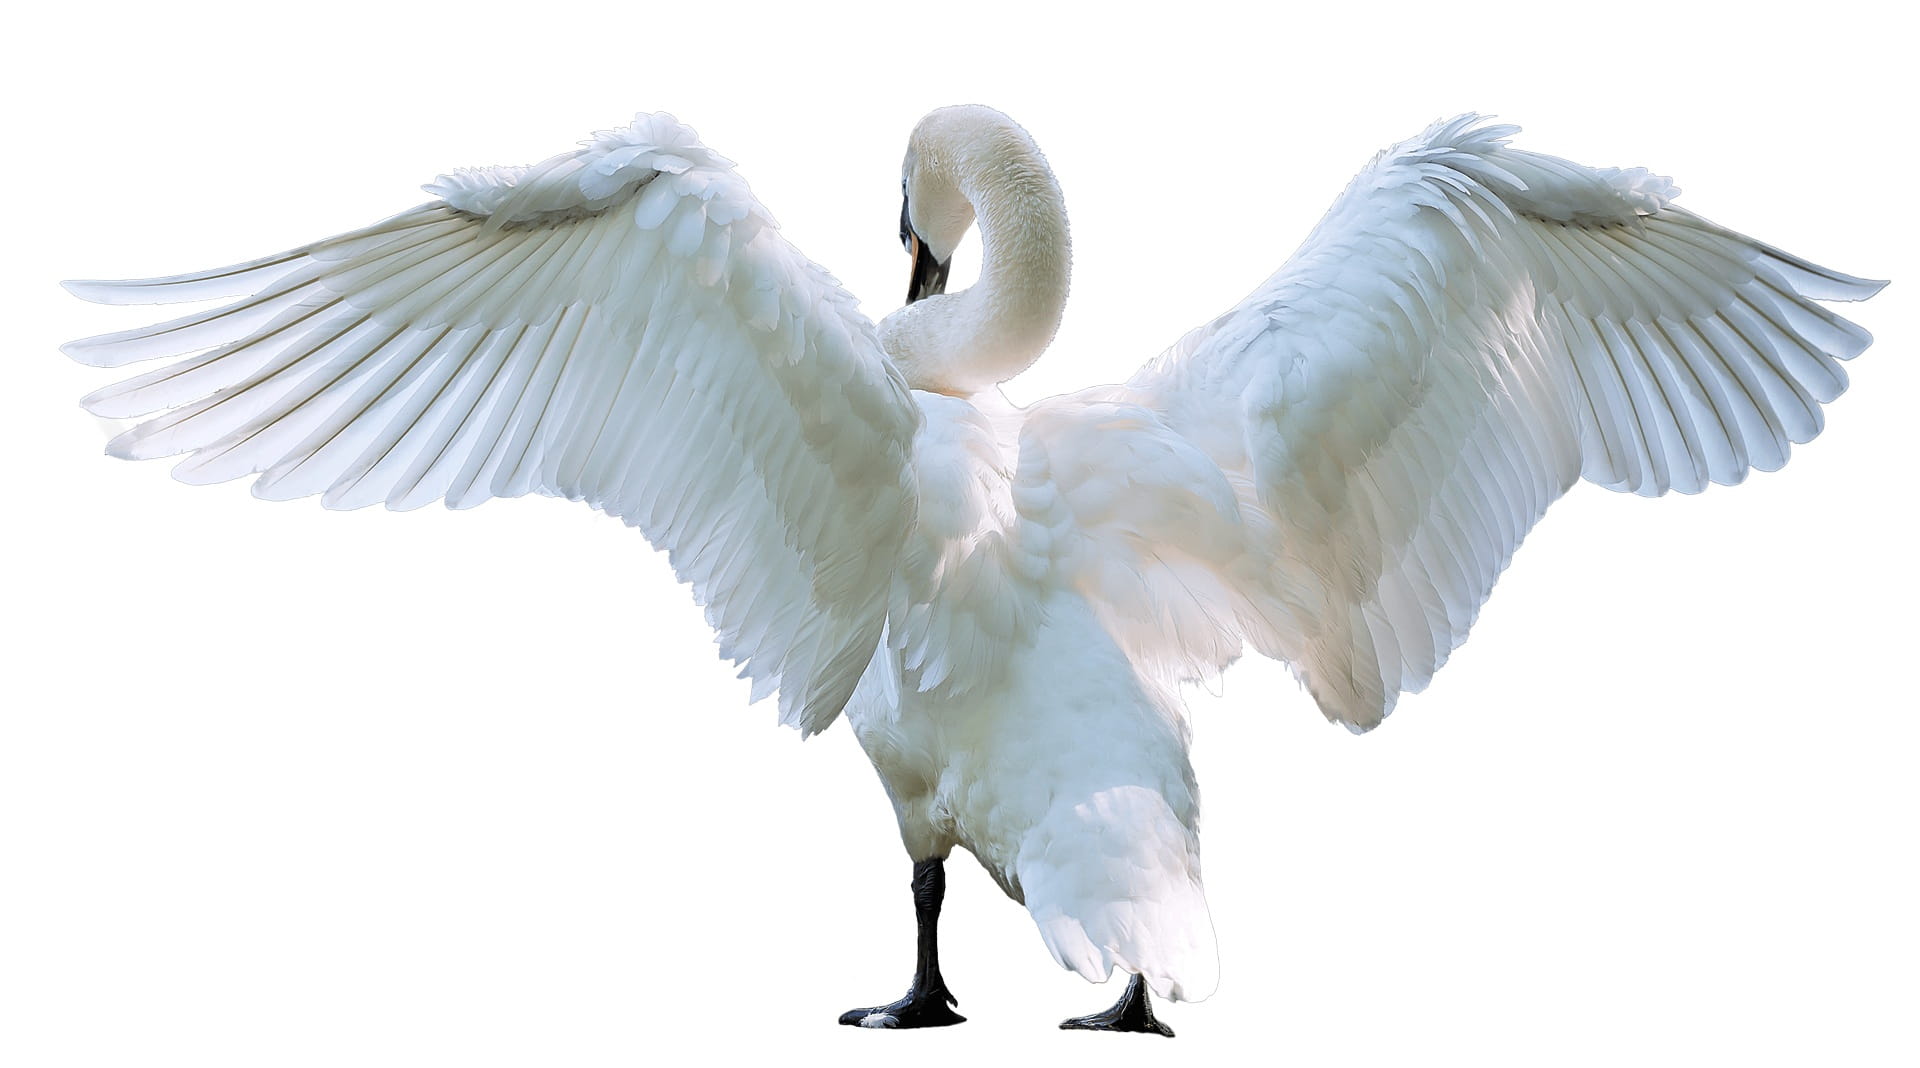 white swan spreading wing, close-up, photo, bird, nature, elegance